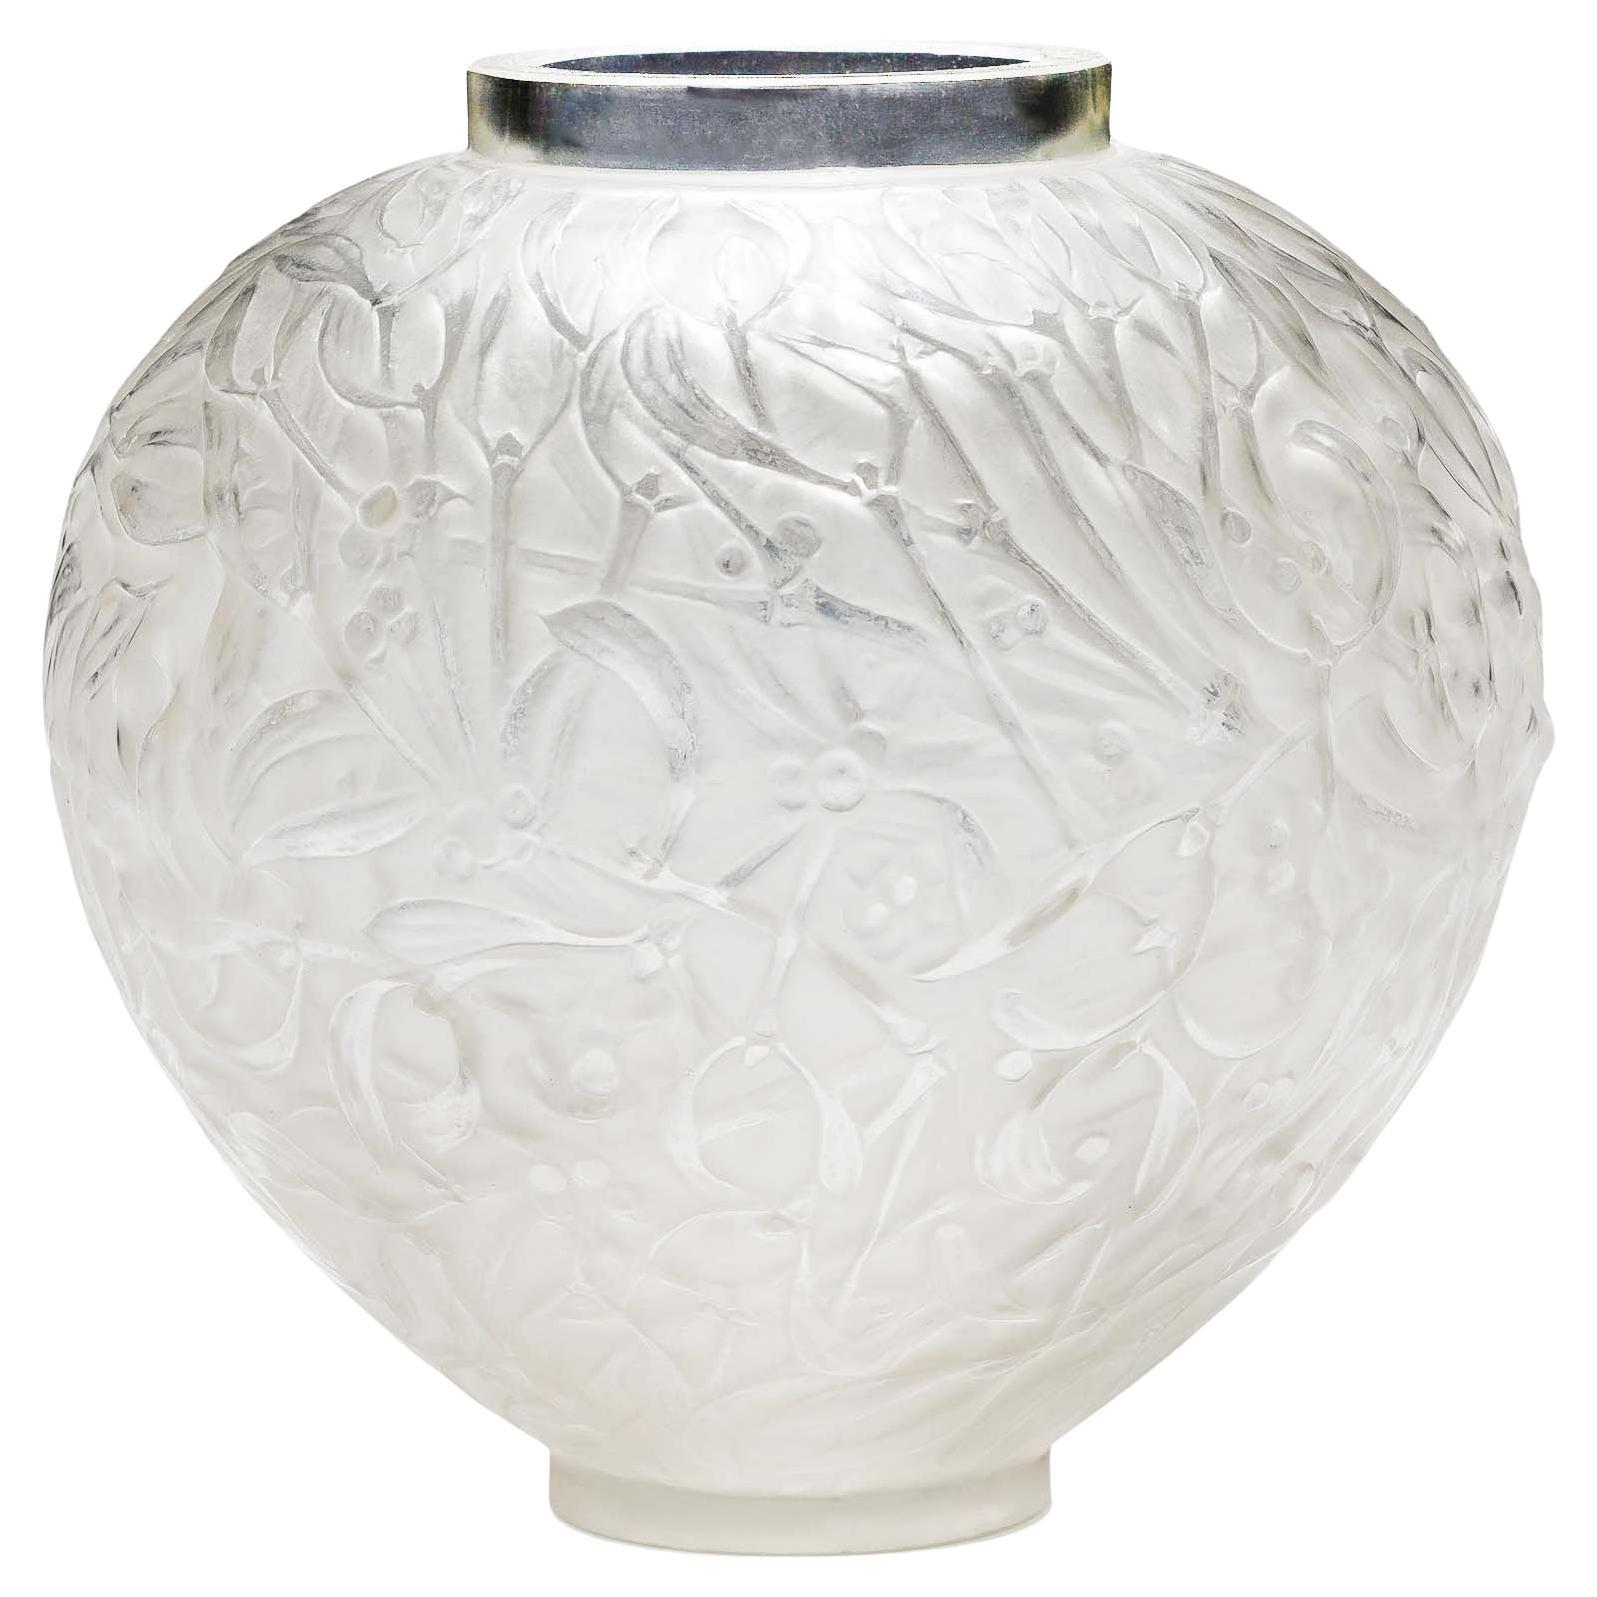 René Lalique "Gui" Frosted Glass Vase, 1920's For Sale